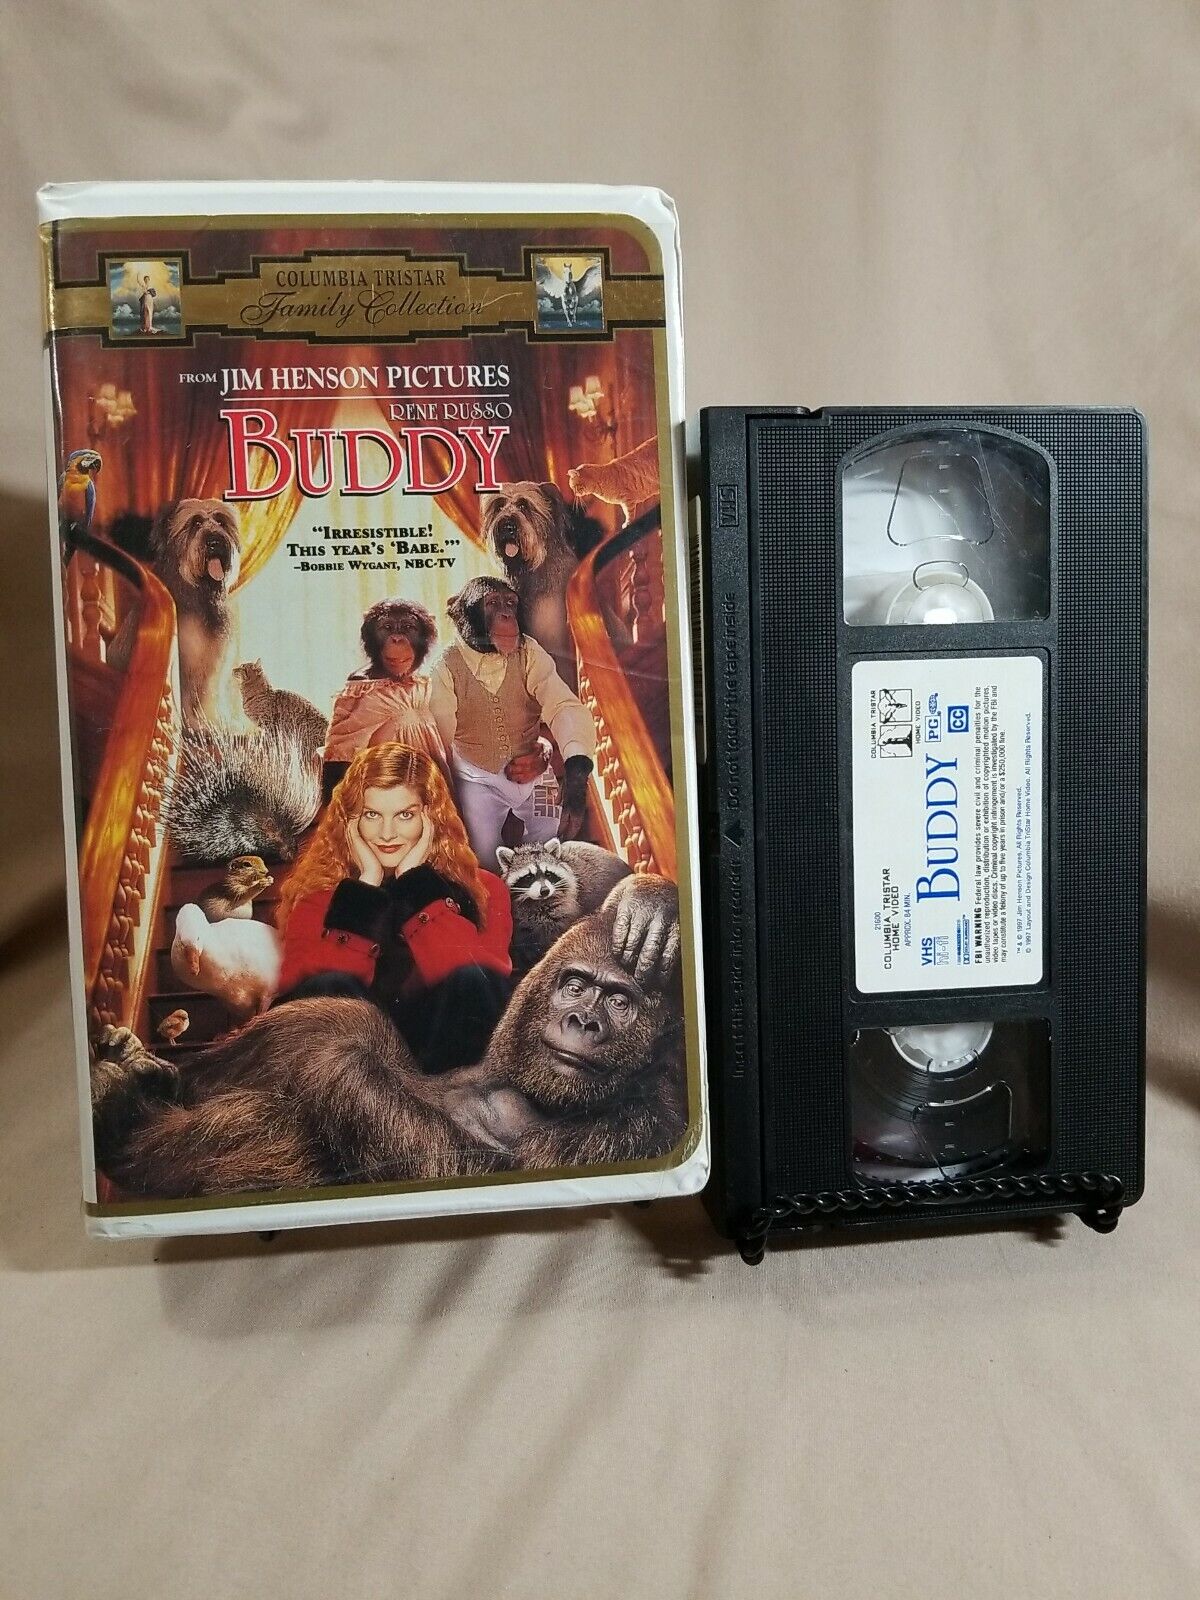 1997 Jim Henson’s Buddy VHS Rene Russo Clamshell Case